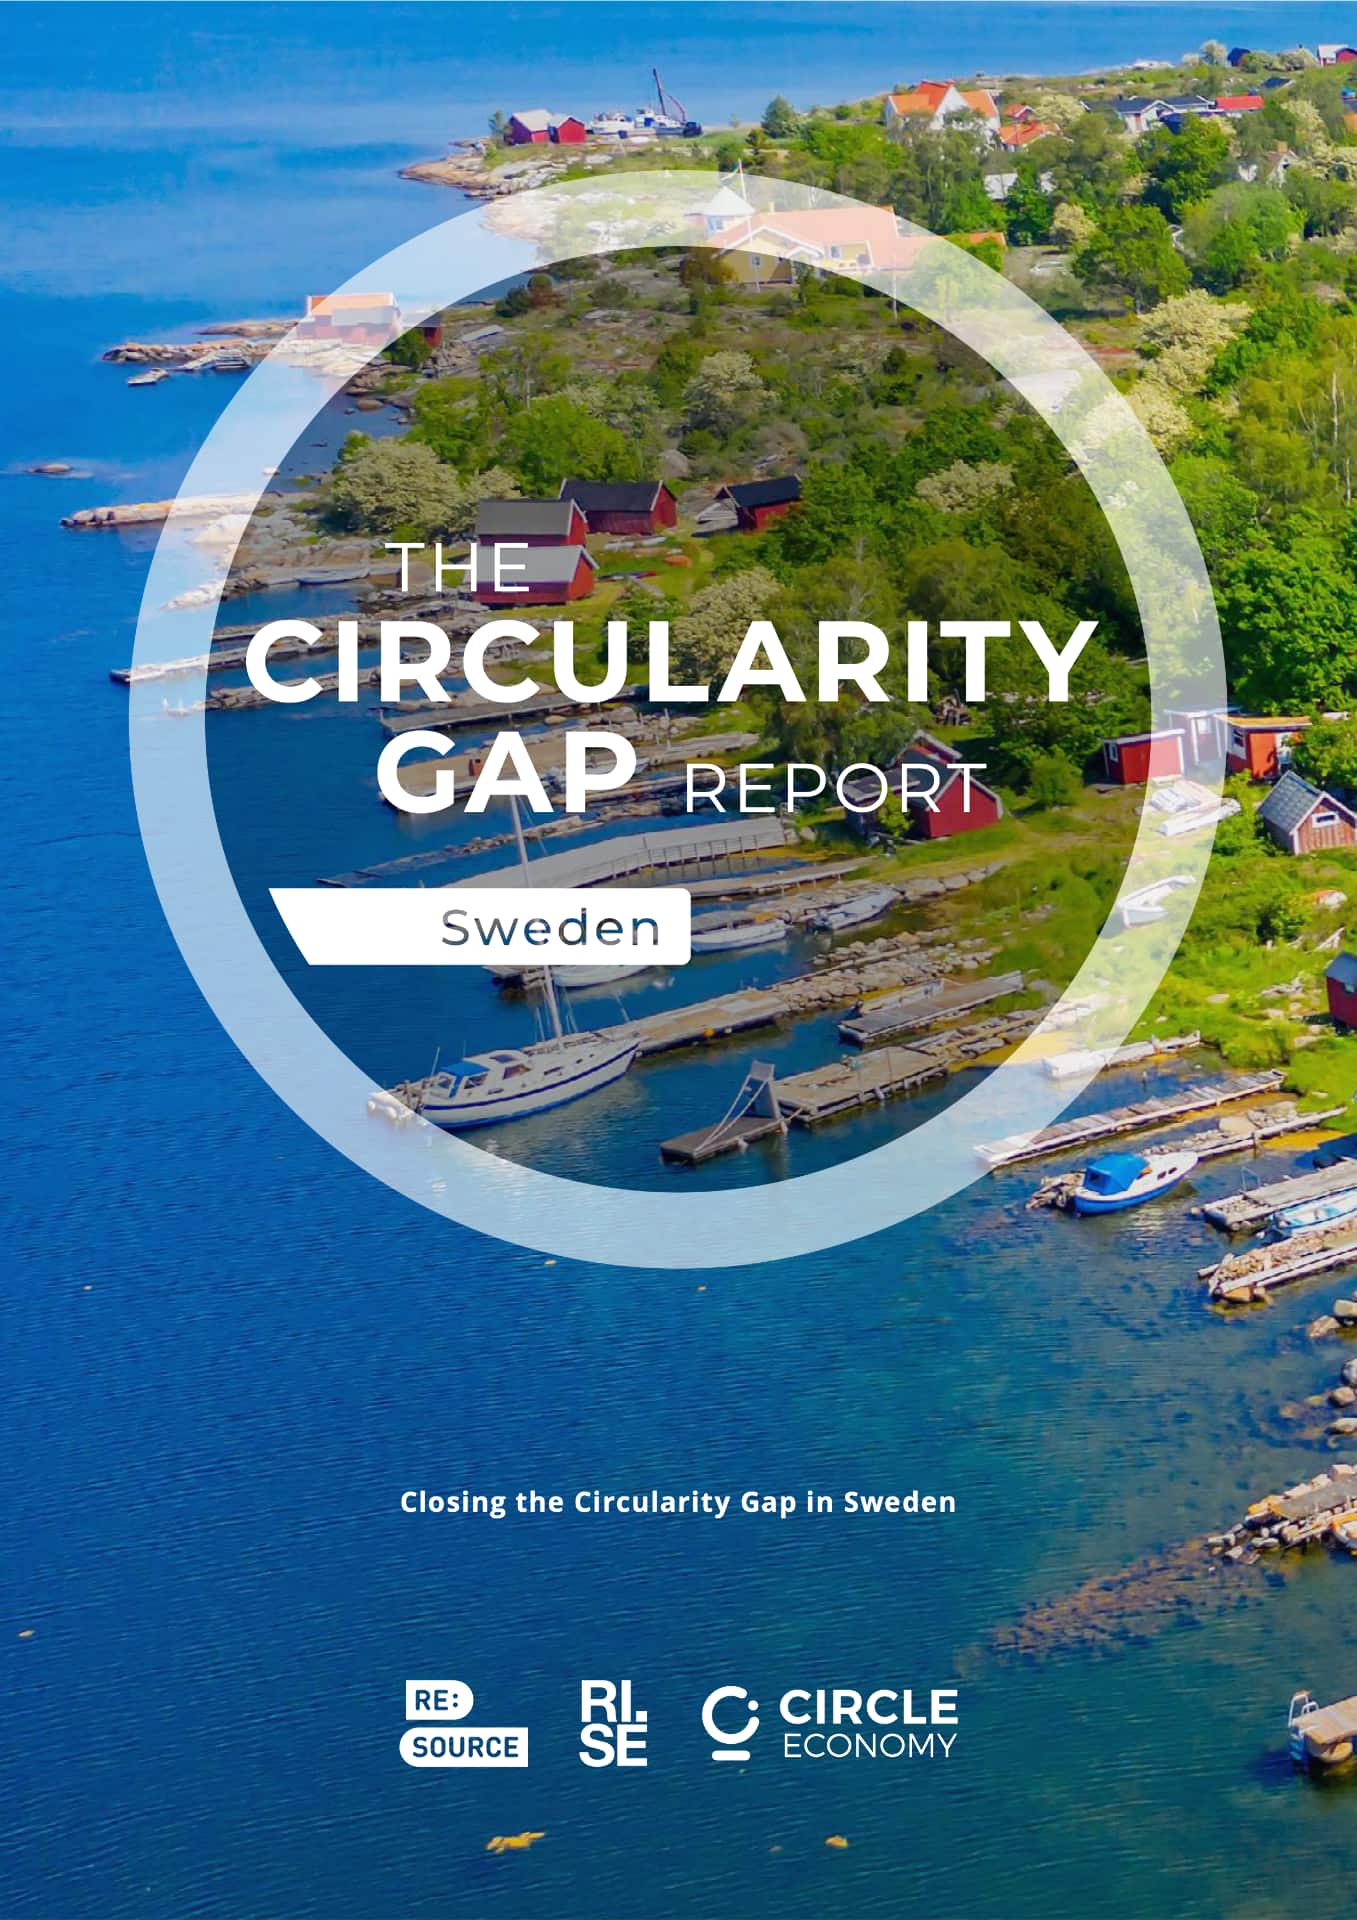 thefuture, Circularity Report - Sweden